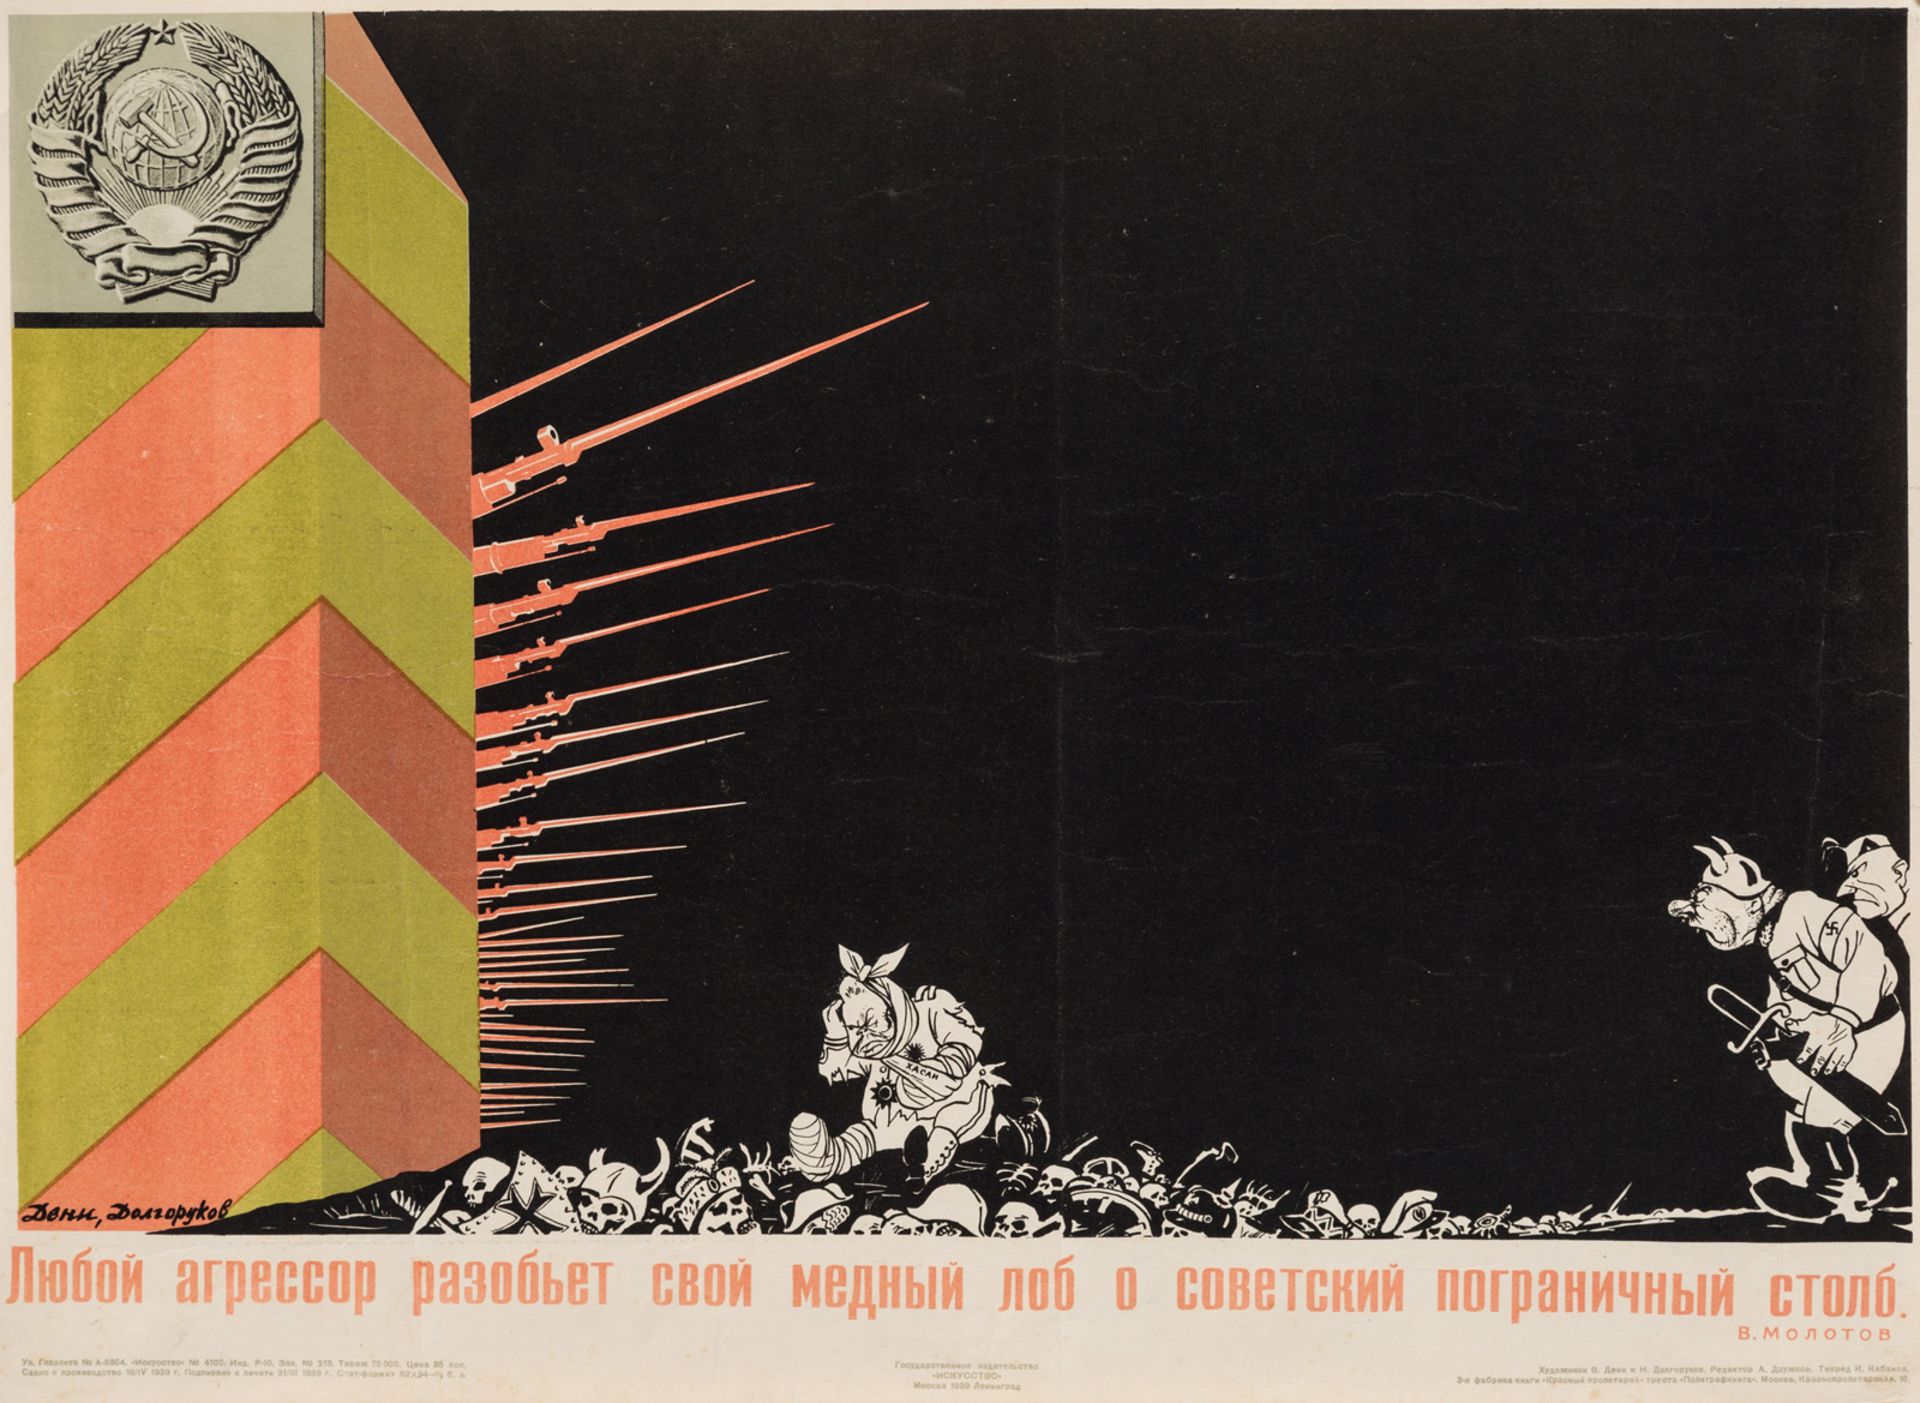 A 1939 SOVIET PROPAGANDA POSTER BY VICTOR DENI AND NIKOLAI DOLGORUKOV (RUSSIAN 1893-1946; 1902-1980)